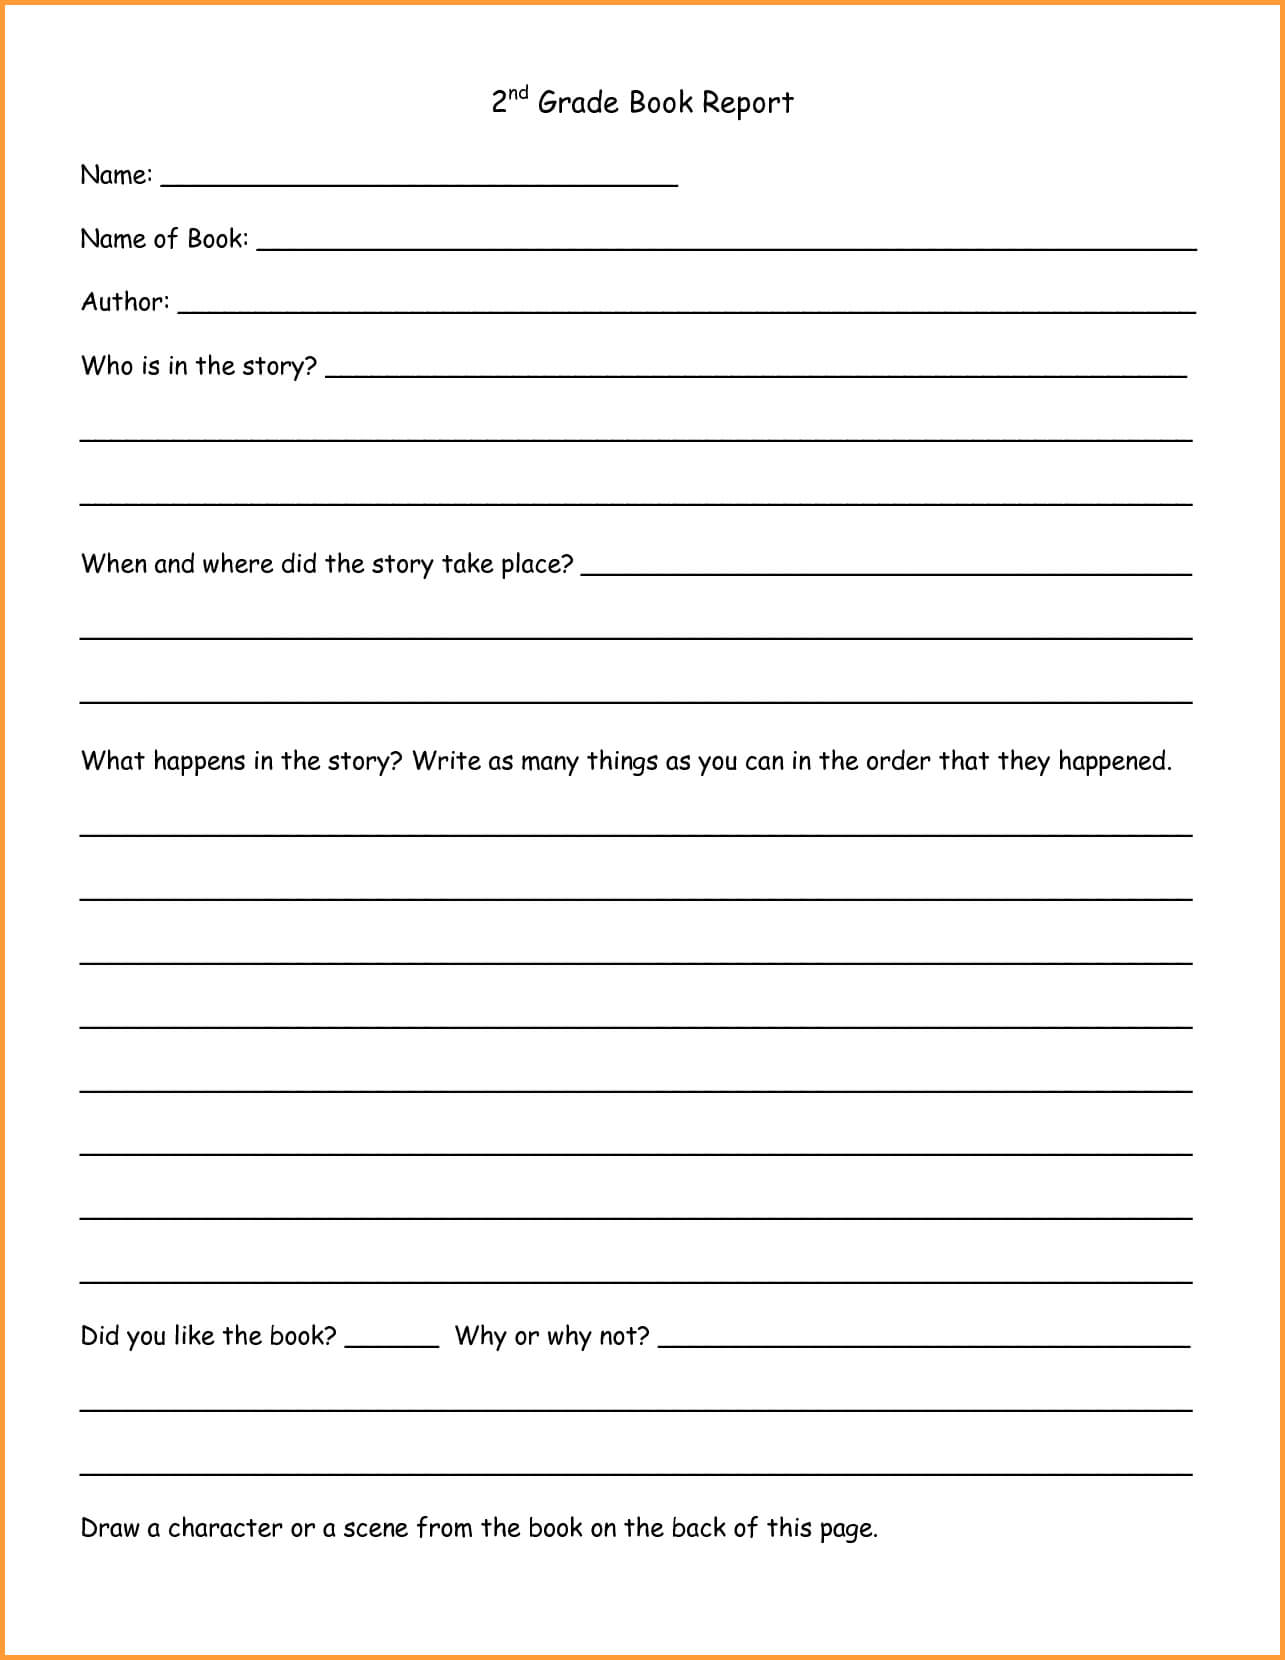 009 Free Book Report Templates Template Wondrous Ideas Throughout 2Nd Grade Book Report Template